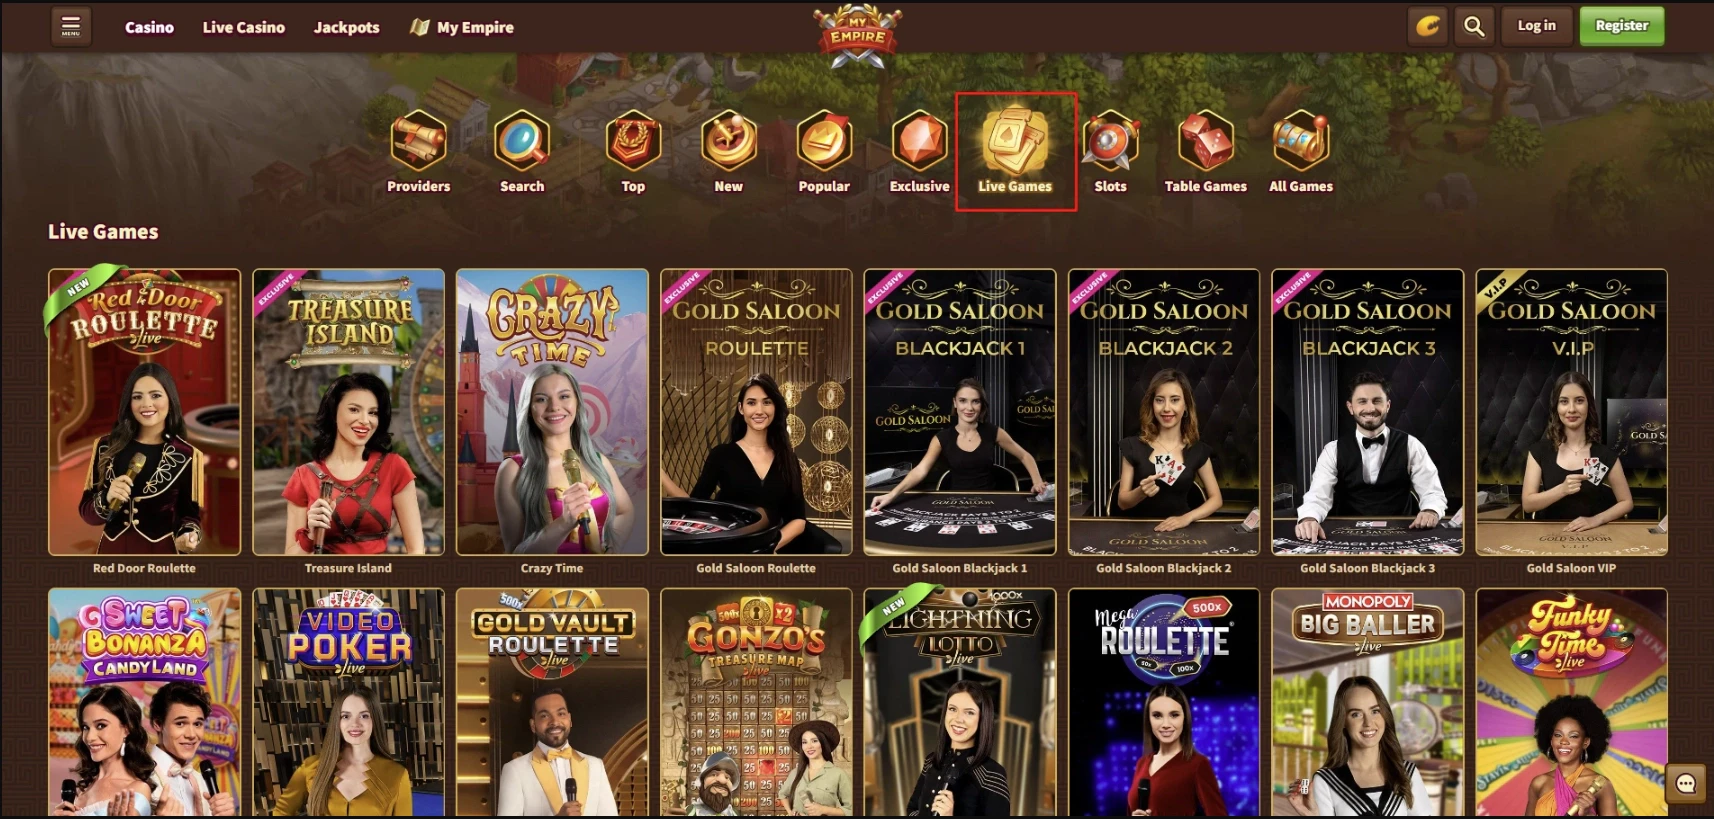 MyEmpire Casino Live Casino Games